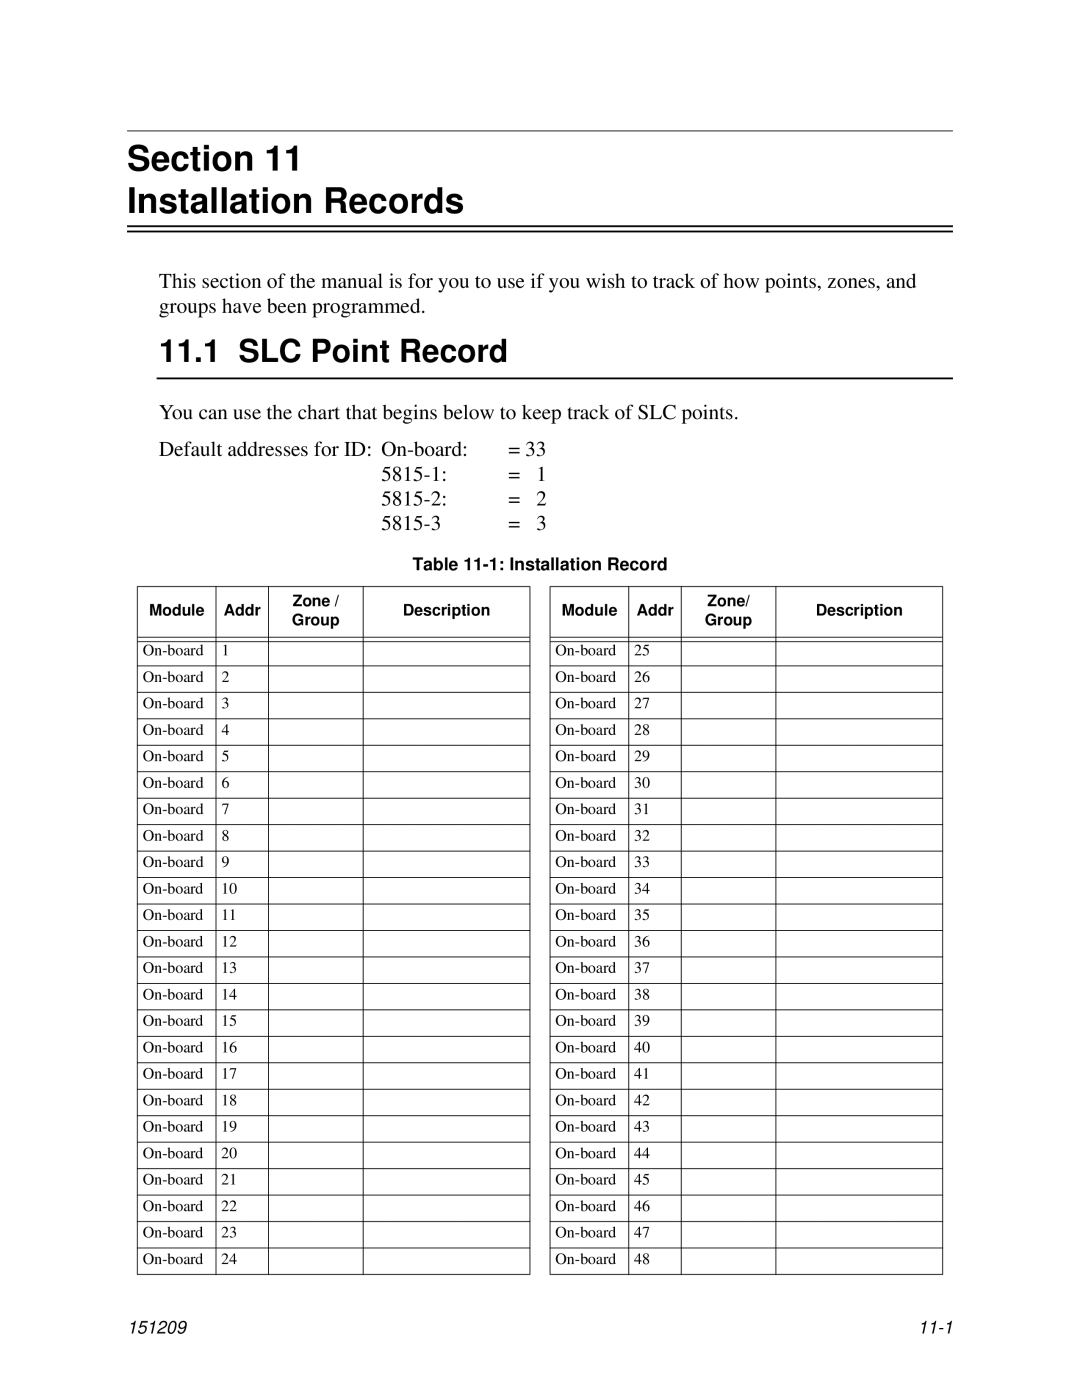 Honeywell 5820XL manual SLC Point Record, Installation Record, Module Addr Zone Description Group 